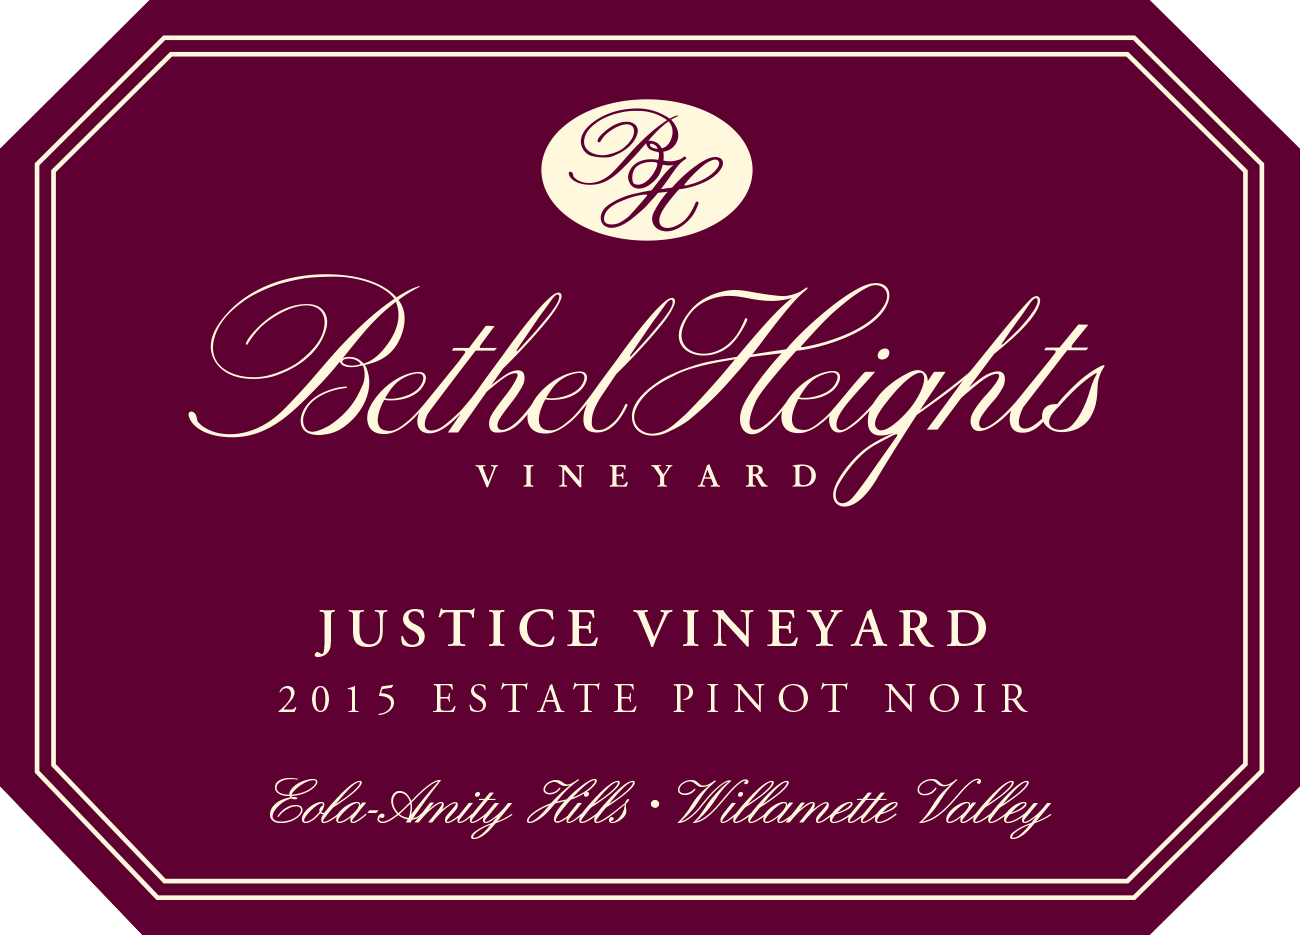 2017 Bethel Heights Pinot Noir Justice Vineyard